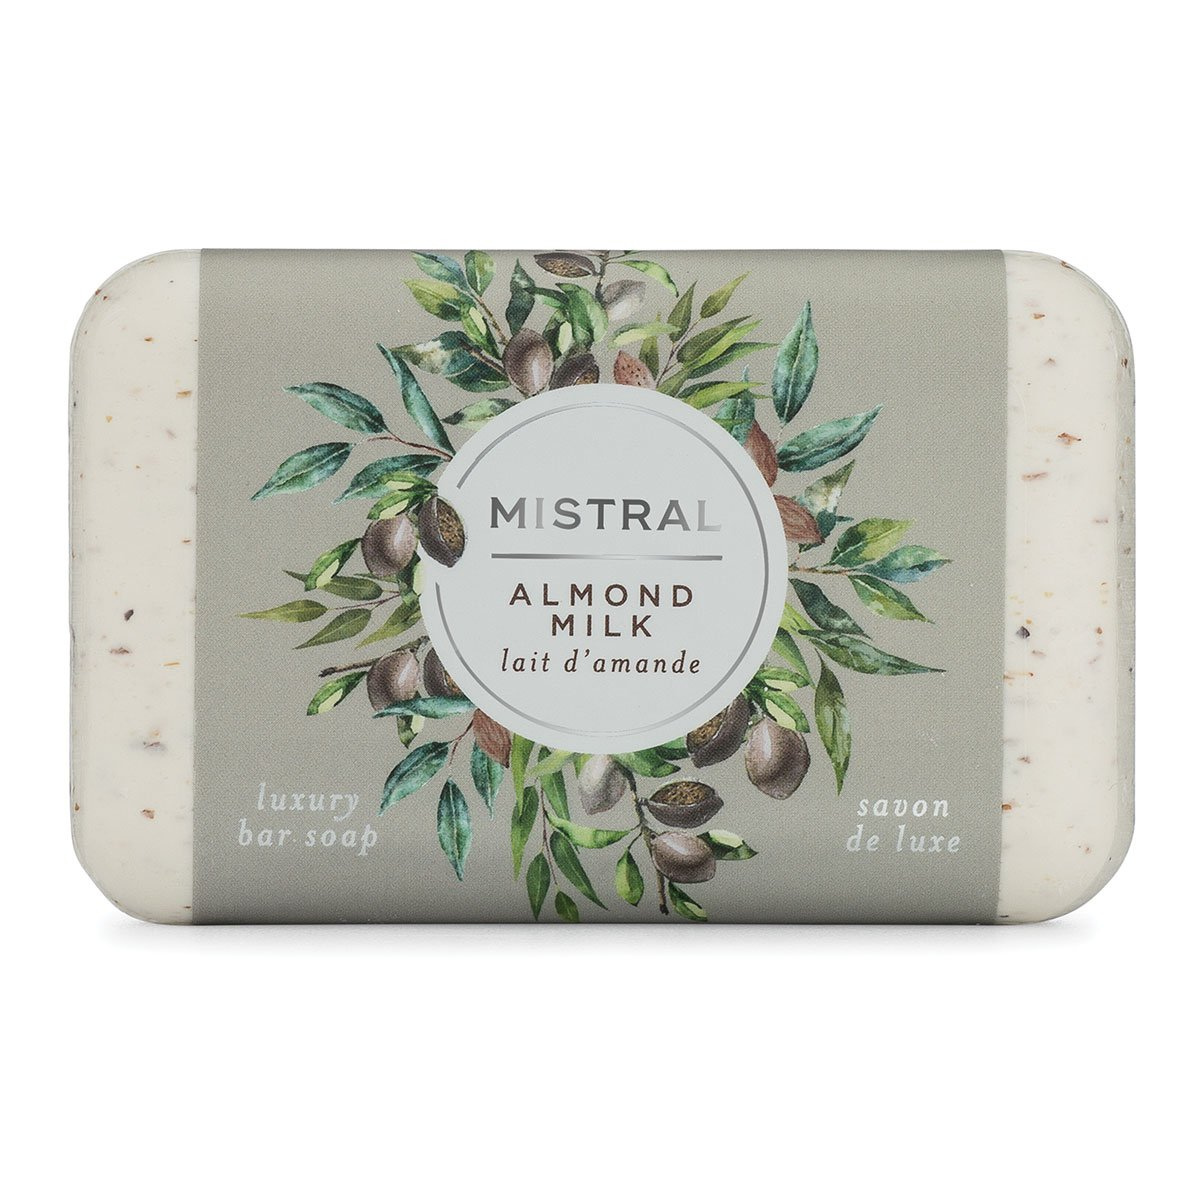 Primary image of Almond Milk Soap